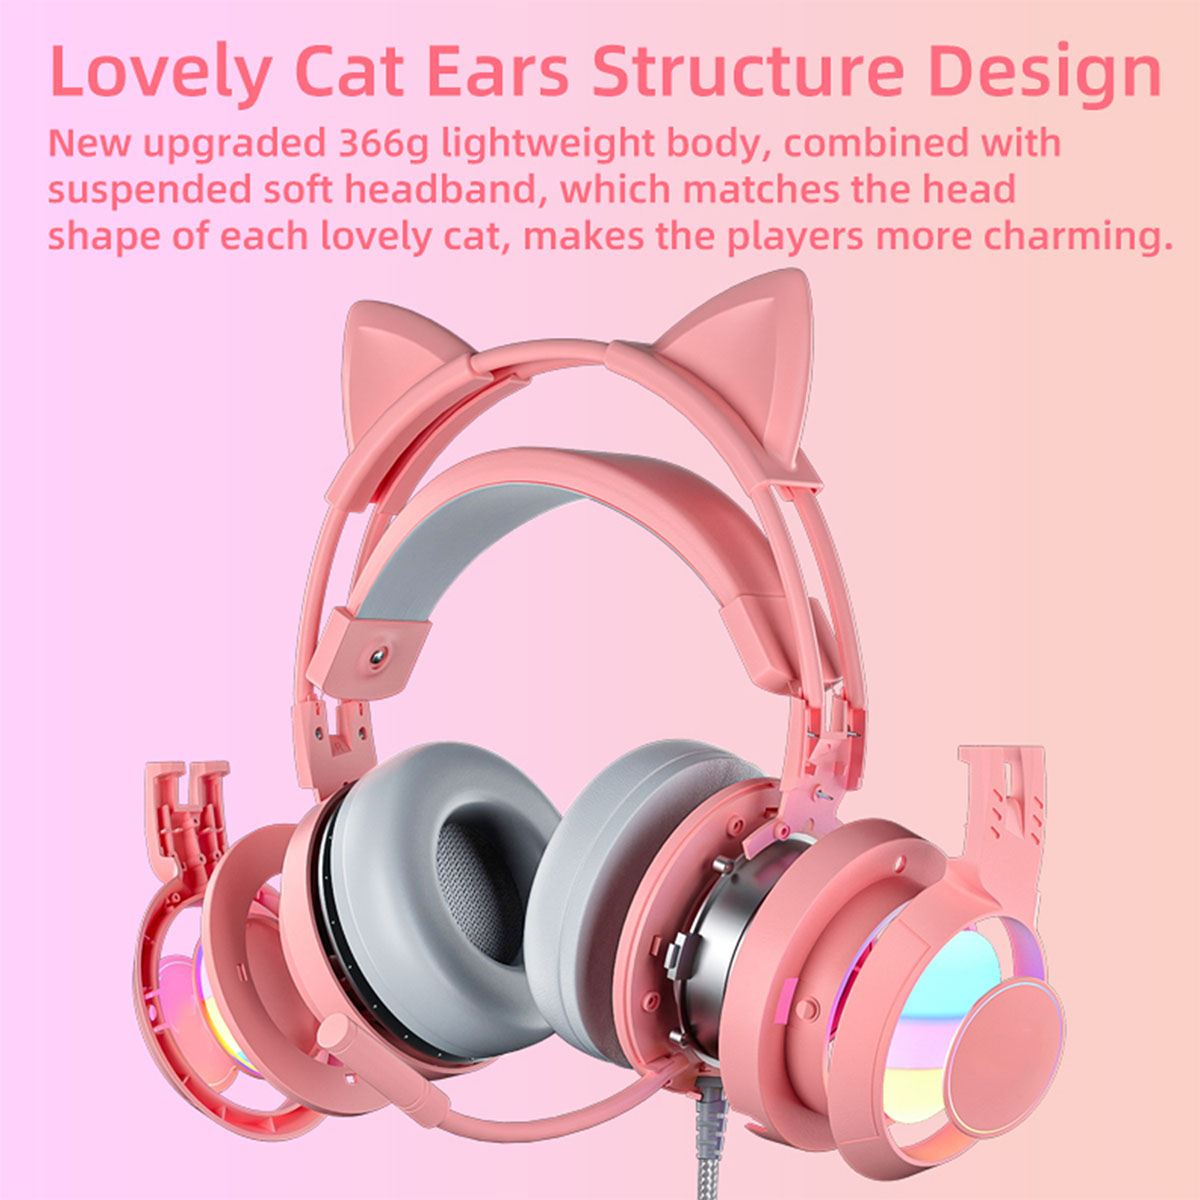 BRIGHTAKE Cat Ear LED-Gaming-Kopfhörer Gaming in einer Erlebe Rosa Dimension, neuen Over-ear Kopfhörer - Gaming